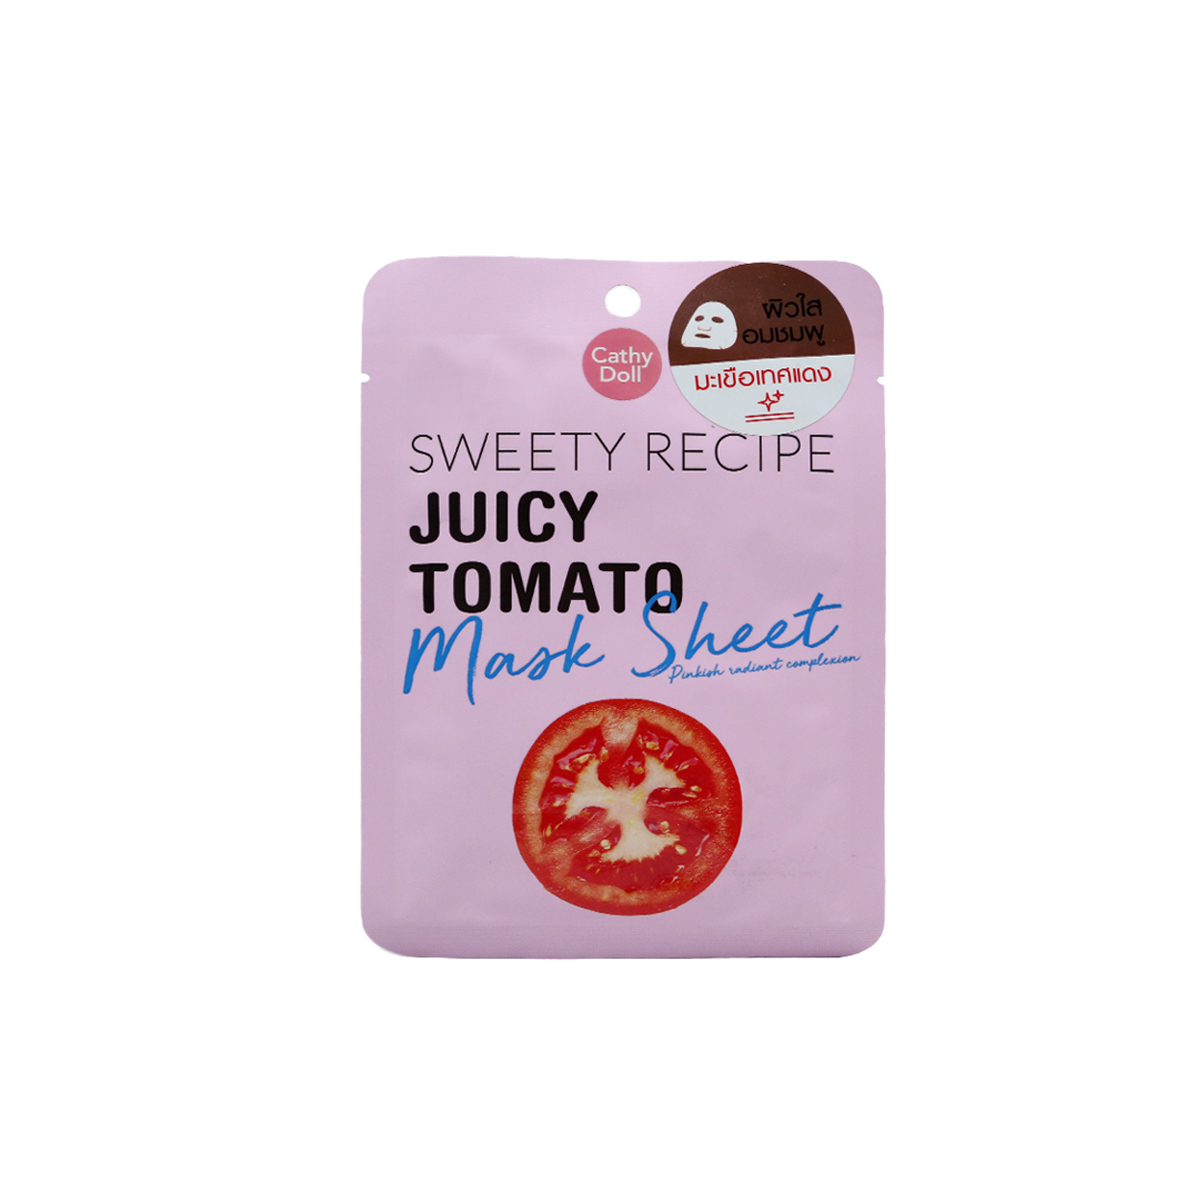 21-8809396170104-Cathy Doll Sweet Recipe Mask Sheet 25GX10 Juicy Tomato 2